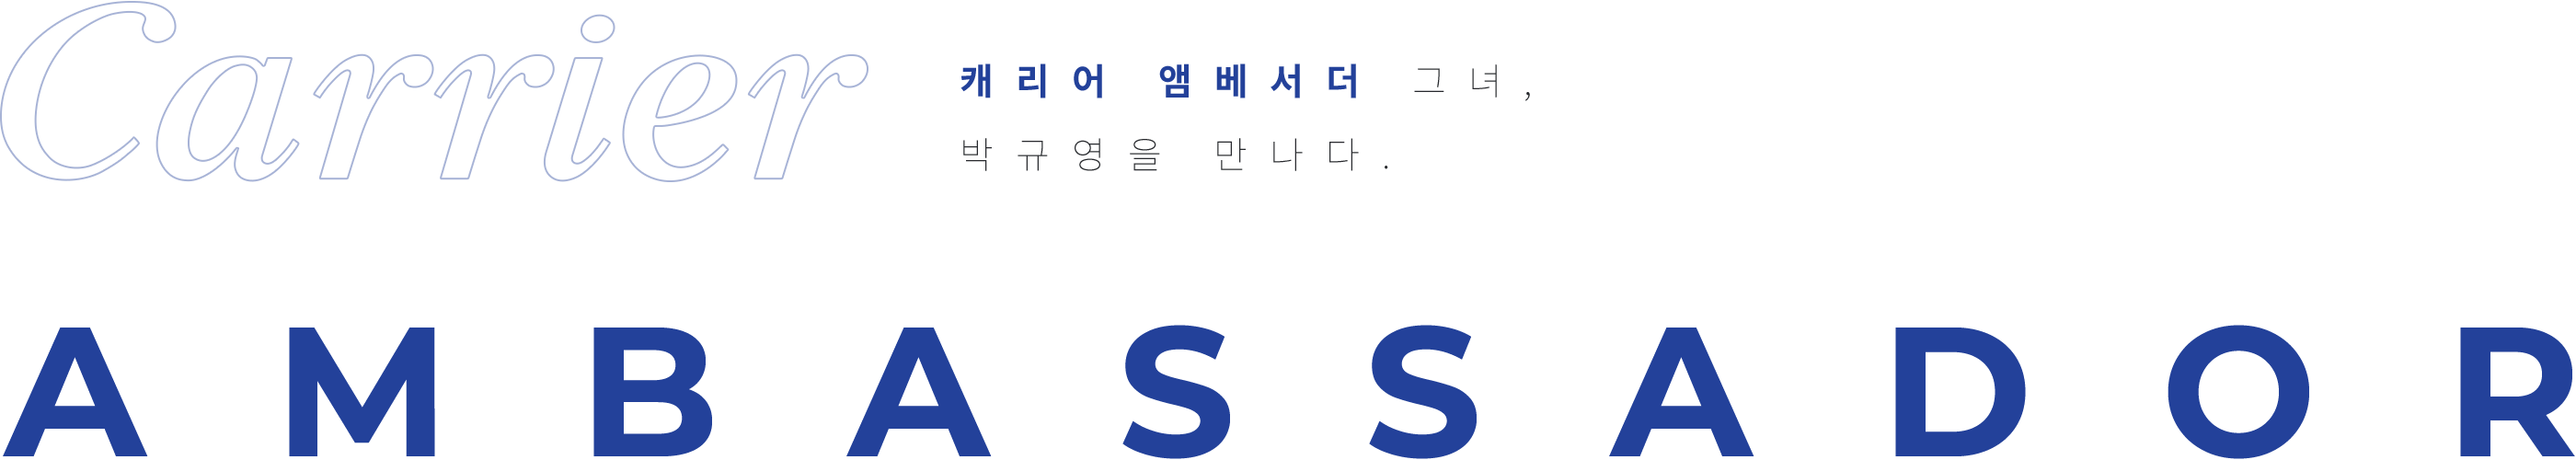 Carrier Ambassador 캐리어 앰베서더 그녀, 박규영을 만나다.